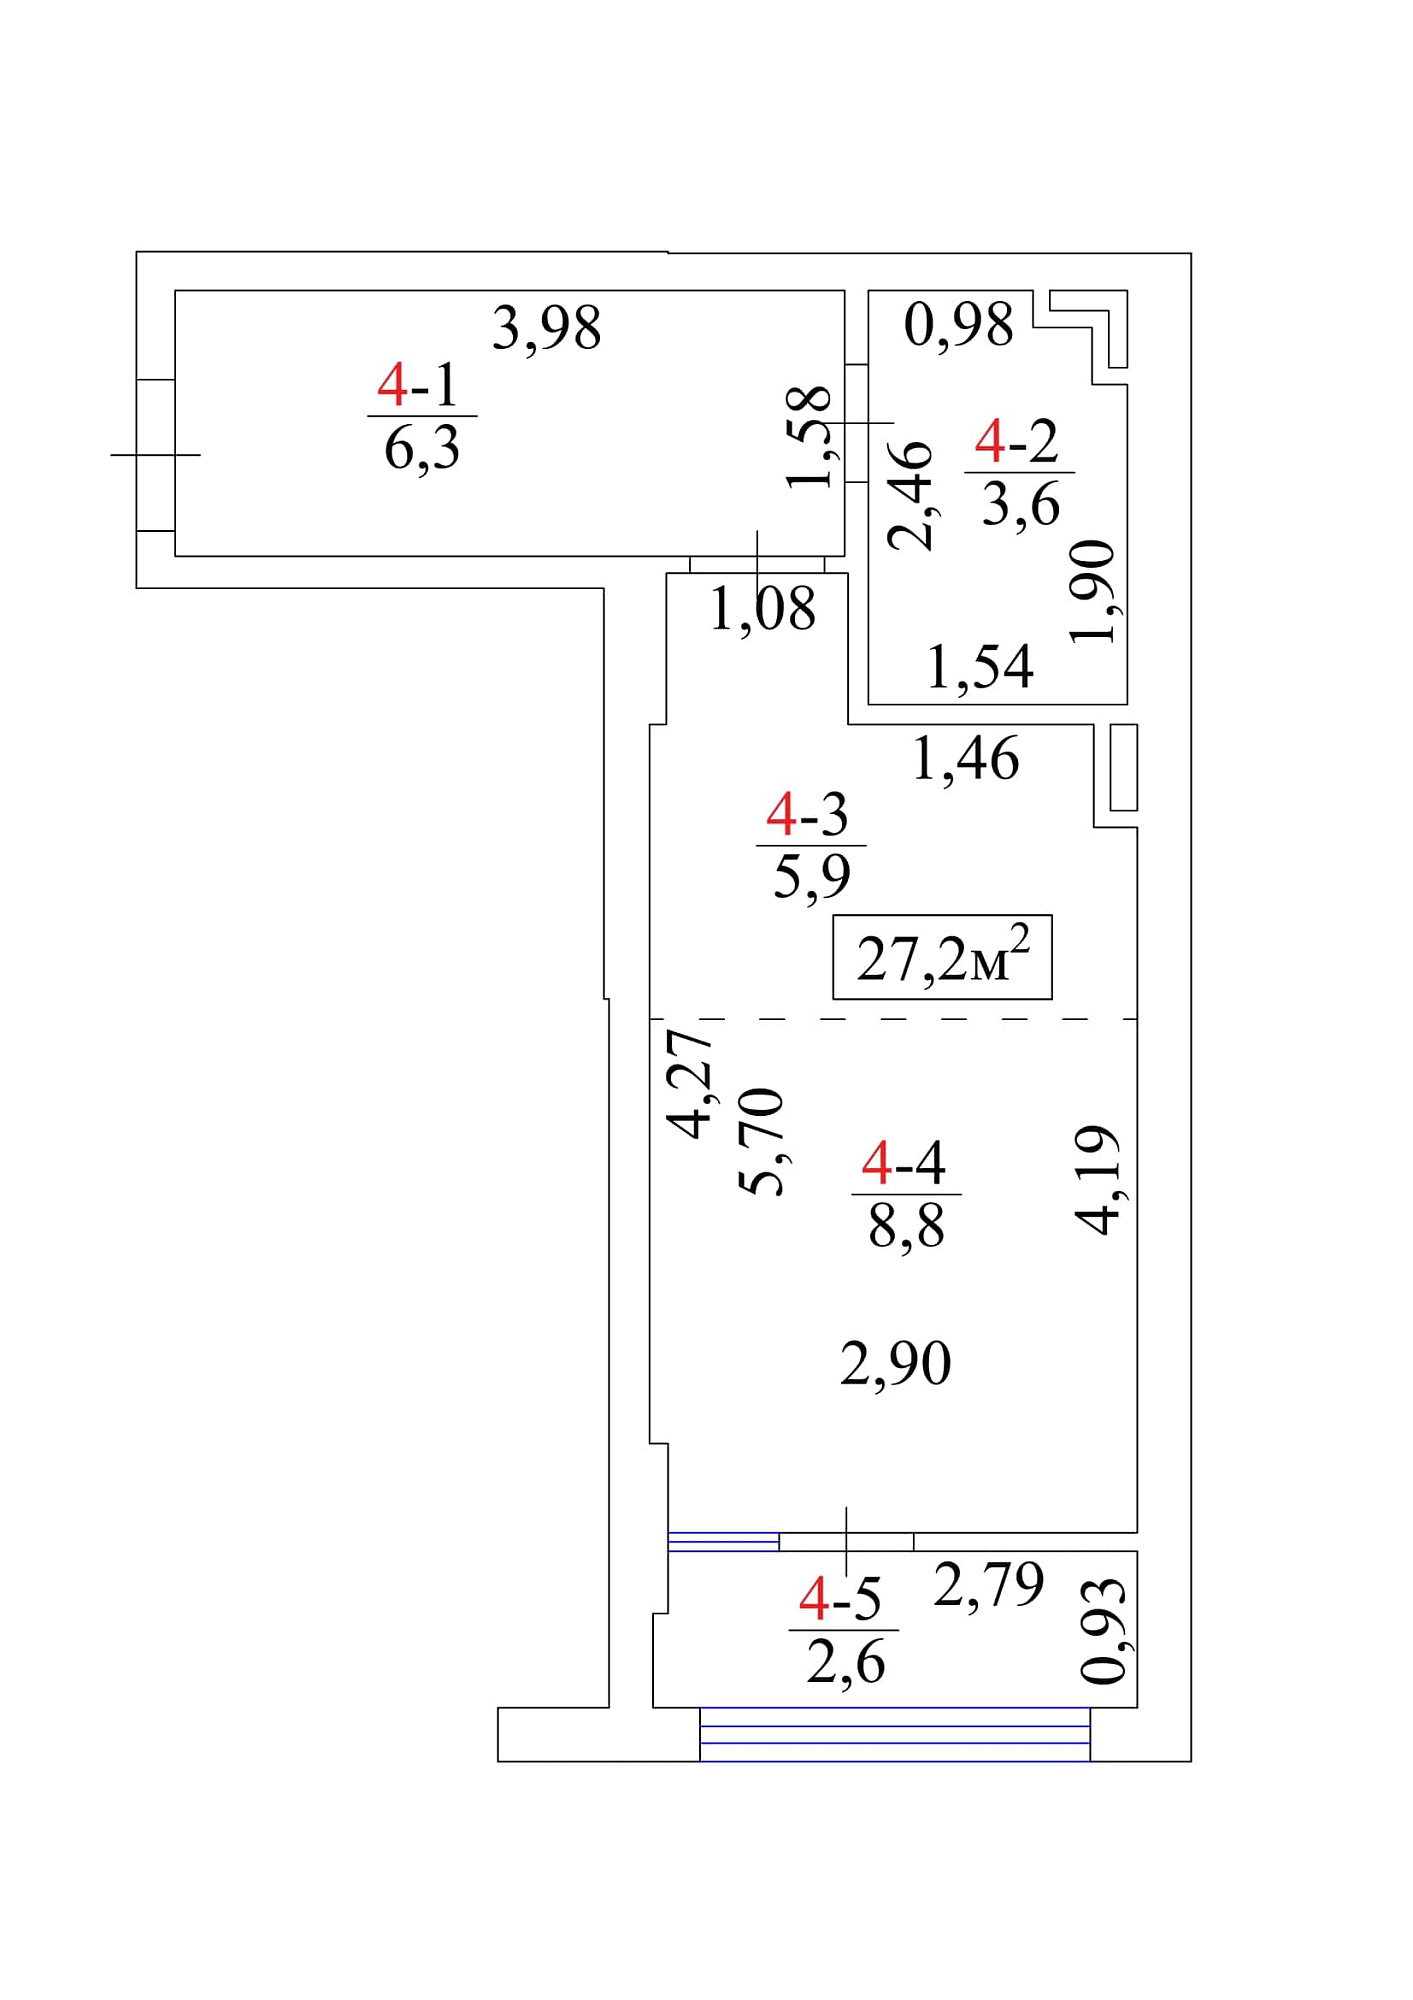 Planning Smart flats area 27.2m2, AB-01-01/00006.